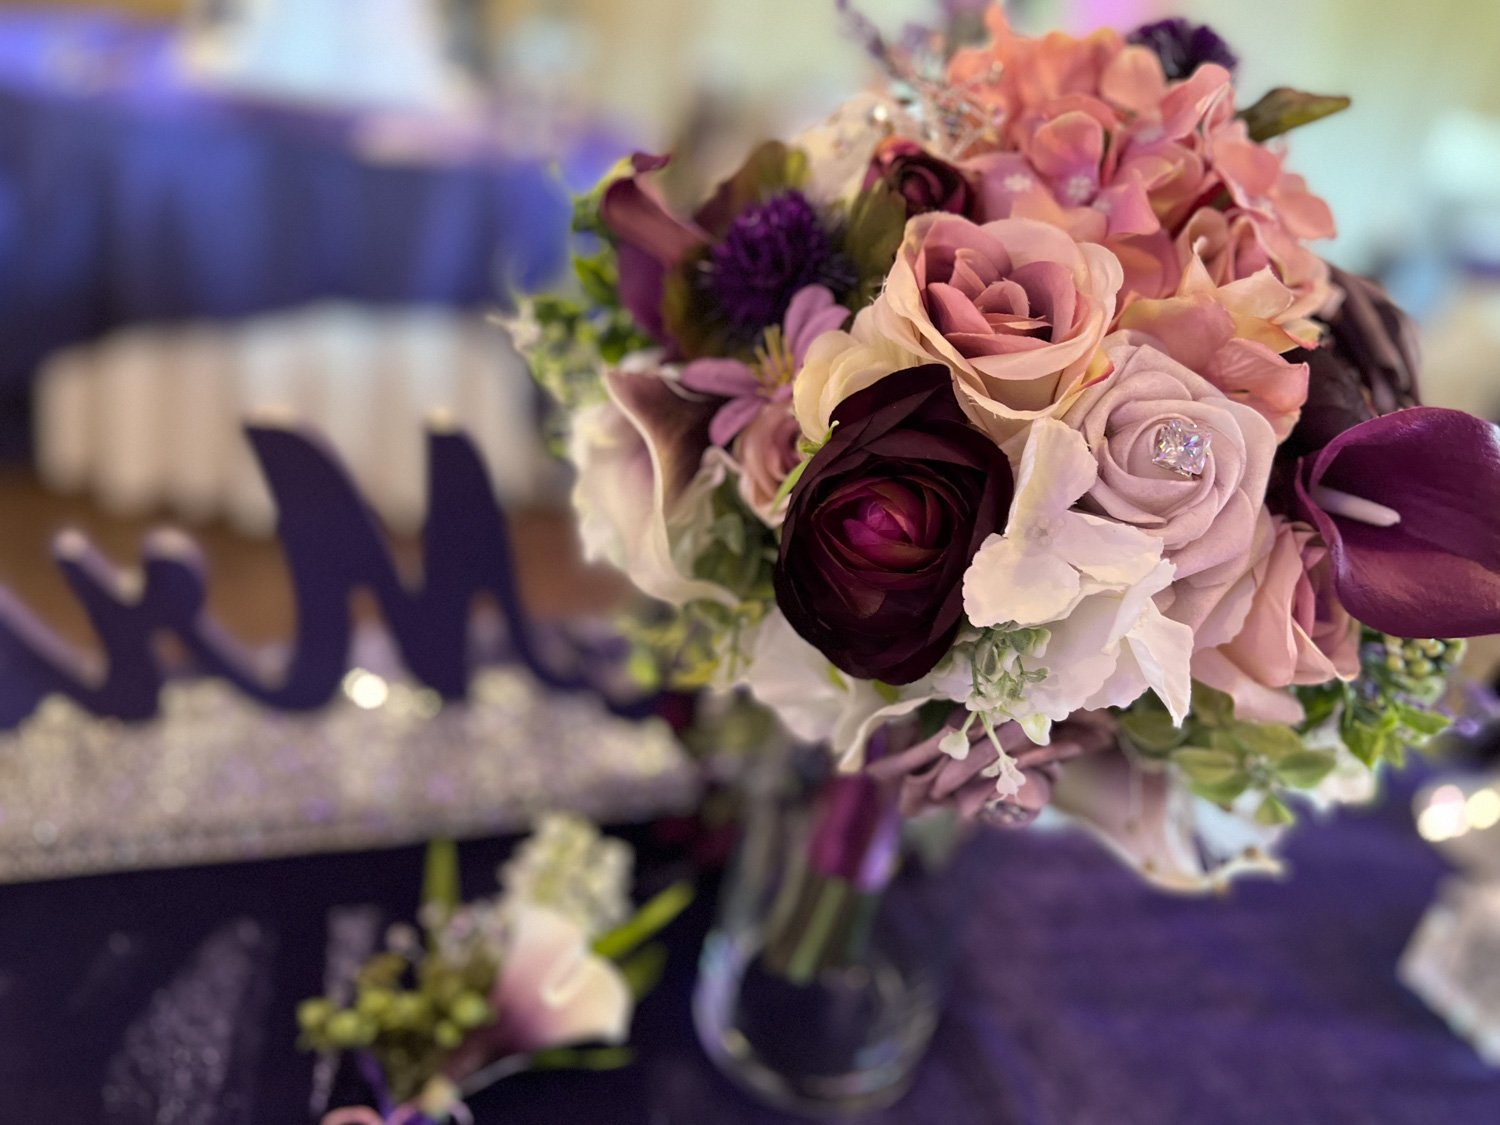 Wedding-flower-arrangement-by-Simply-Elegant-Events.jpg